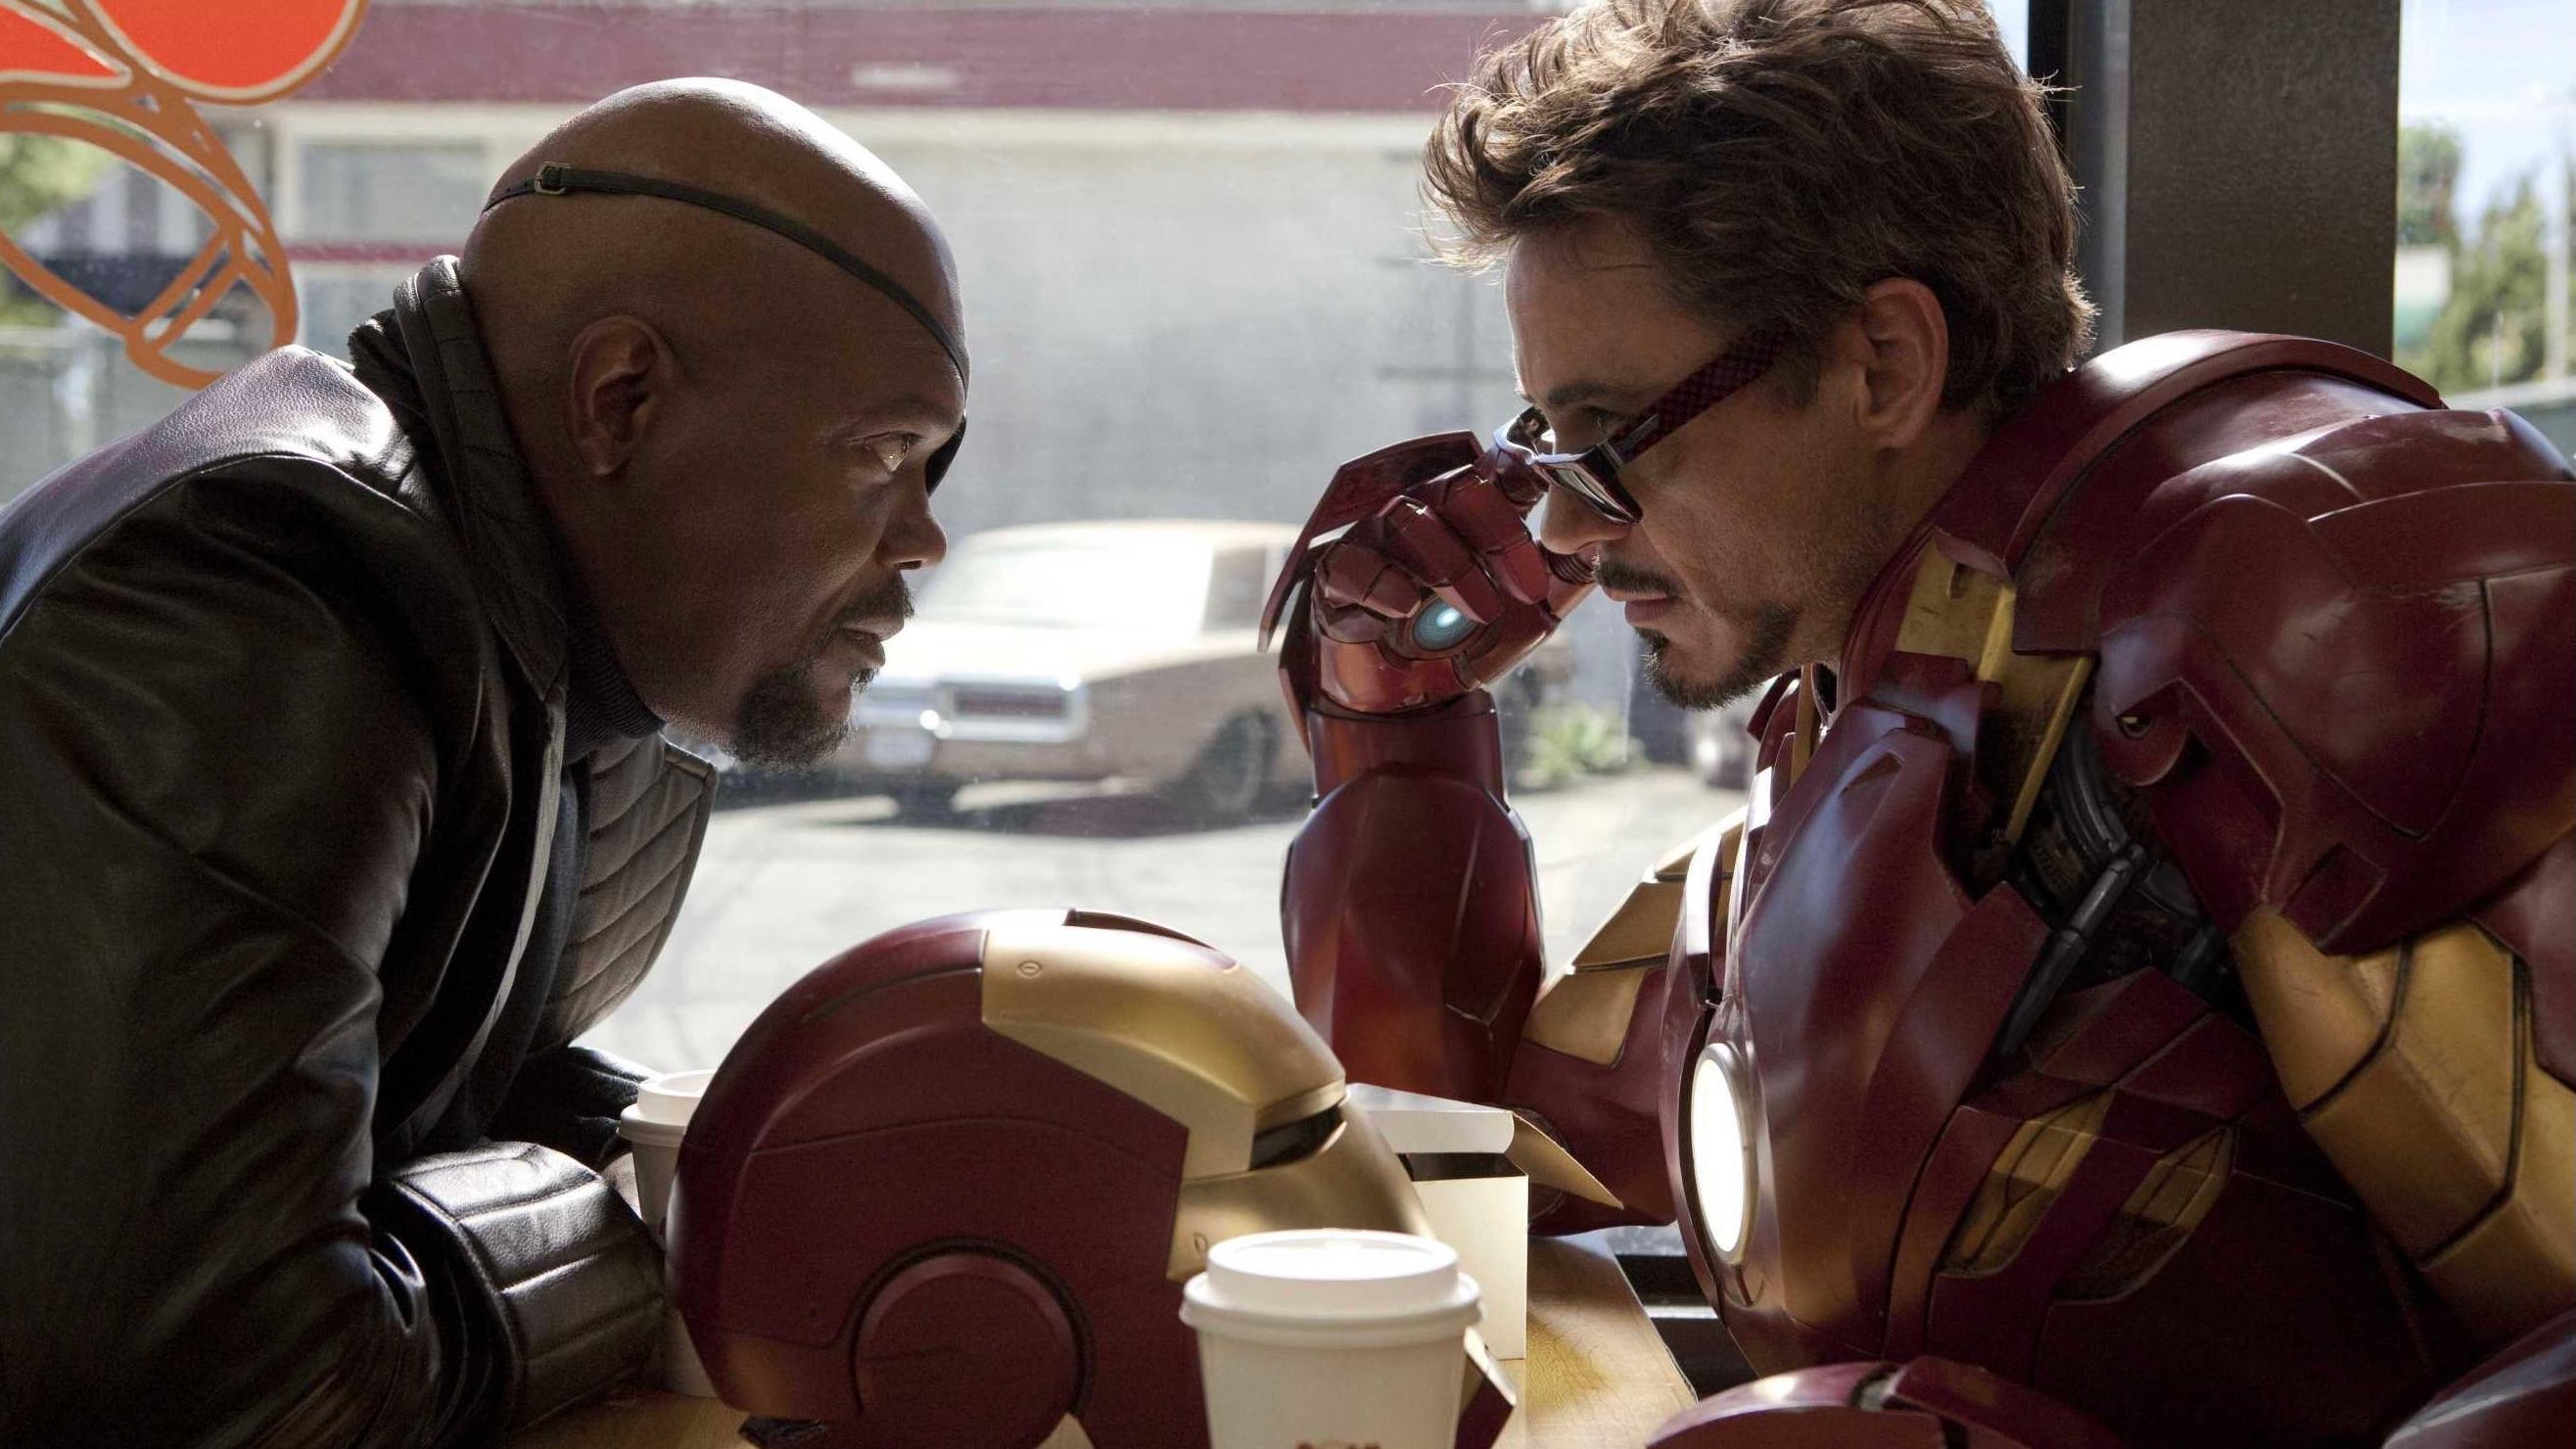 Nick-Fury-and-Tony-Stark-in-Phase-1-Marvel-Cinematic-Universe-Movie-Iron-Man-2